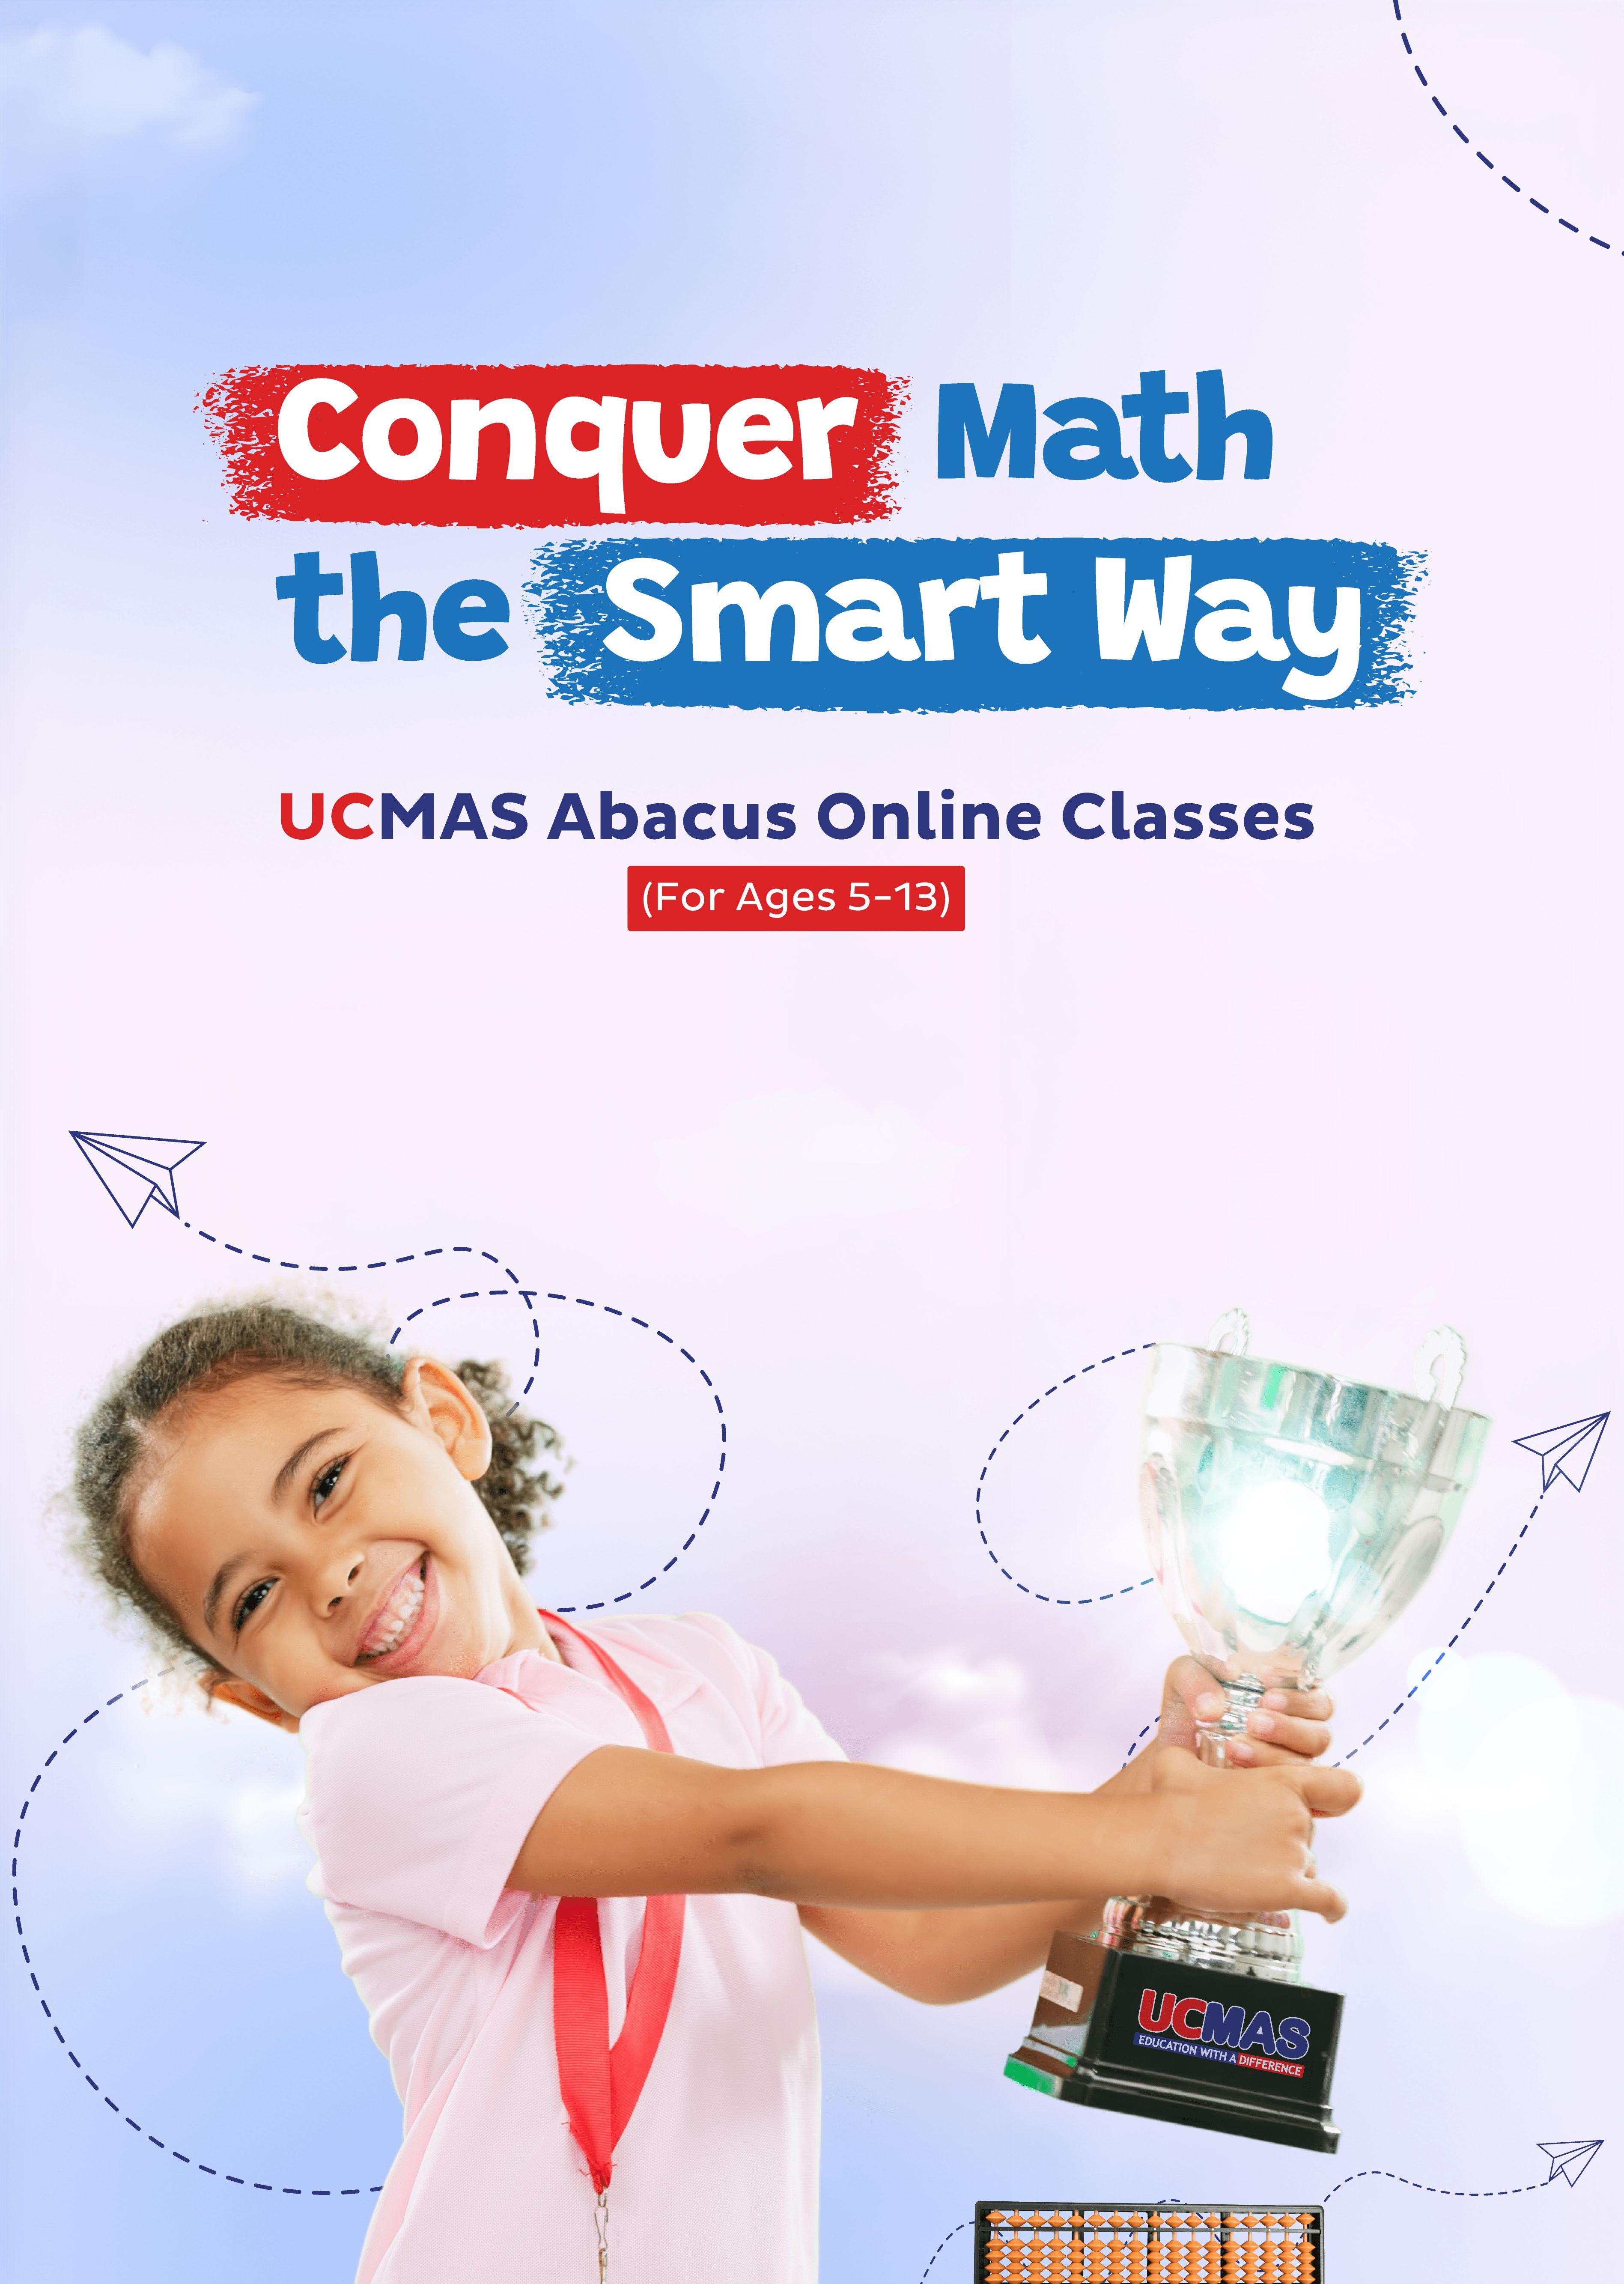 UCMAS Online Abacus Classes